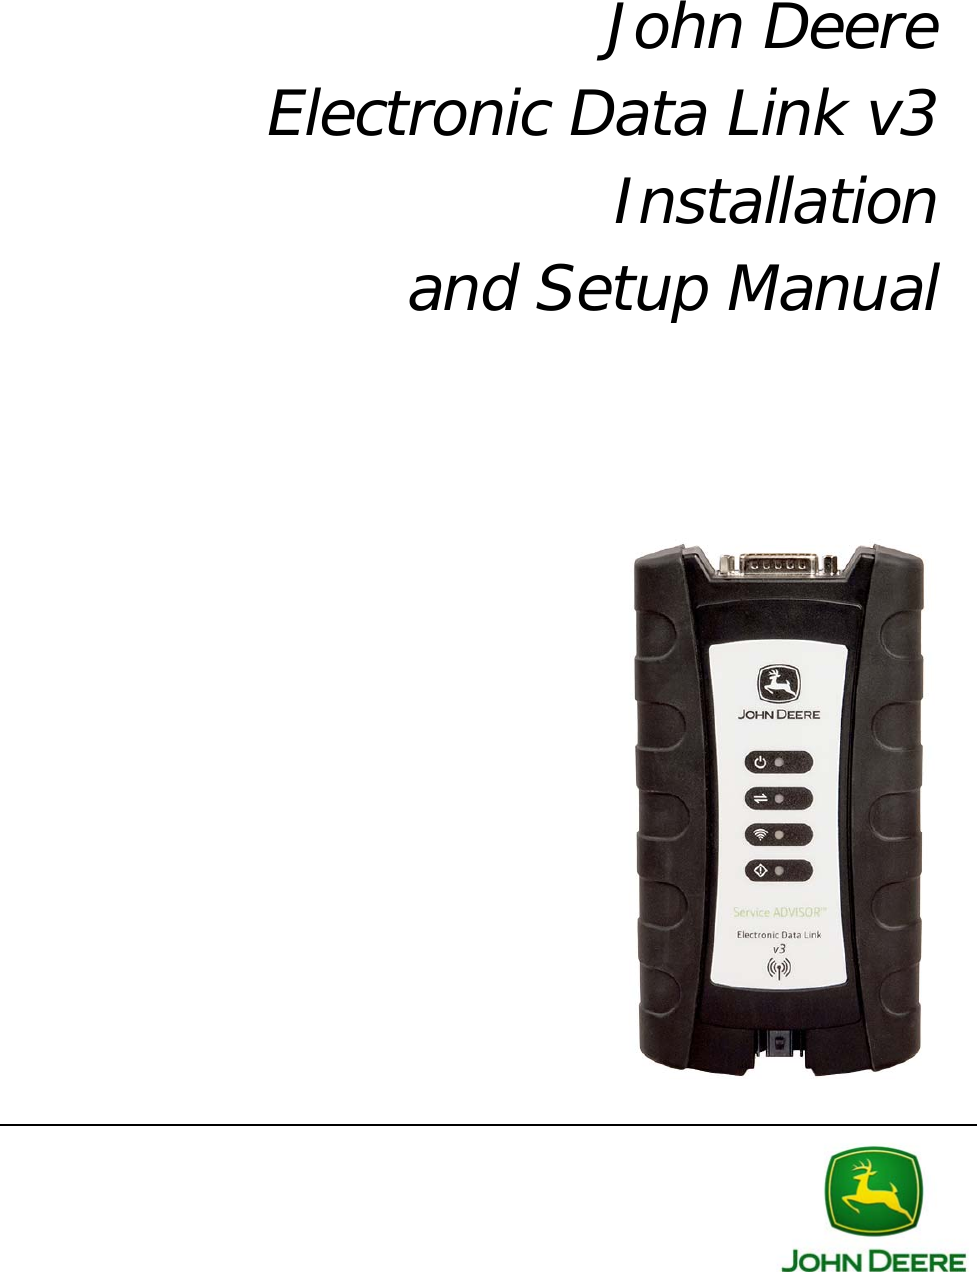 John Deere Electronic Data Link v3 Installation and Setup Manual